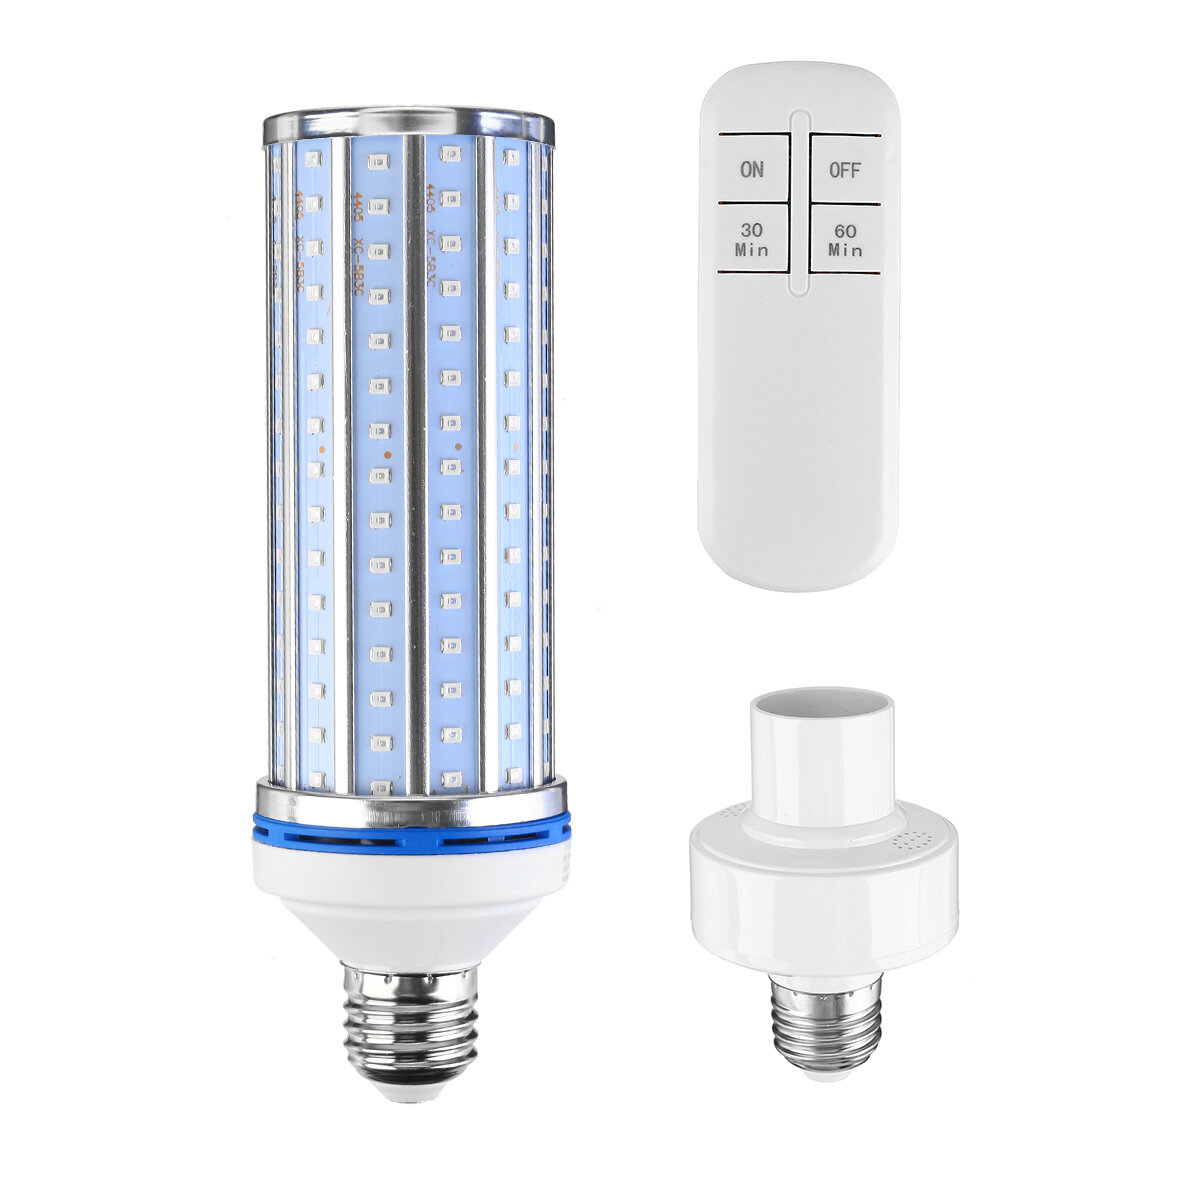 60W 110V / 220V UV Kiemdodende LED-lamp 30Min / 60Min Timing Desinfectie Sterilisatielamp met afstan